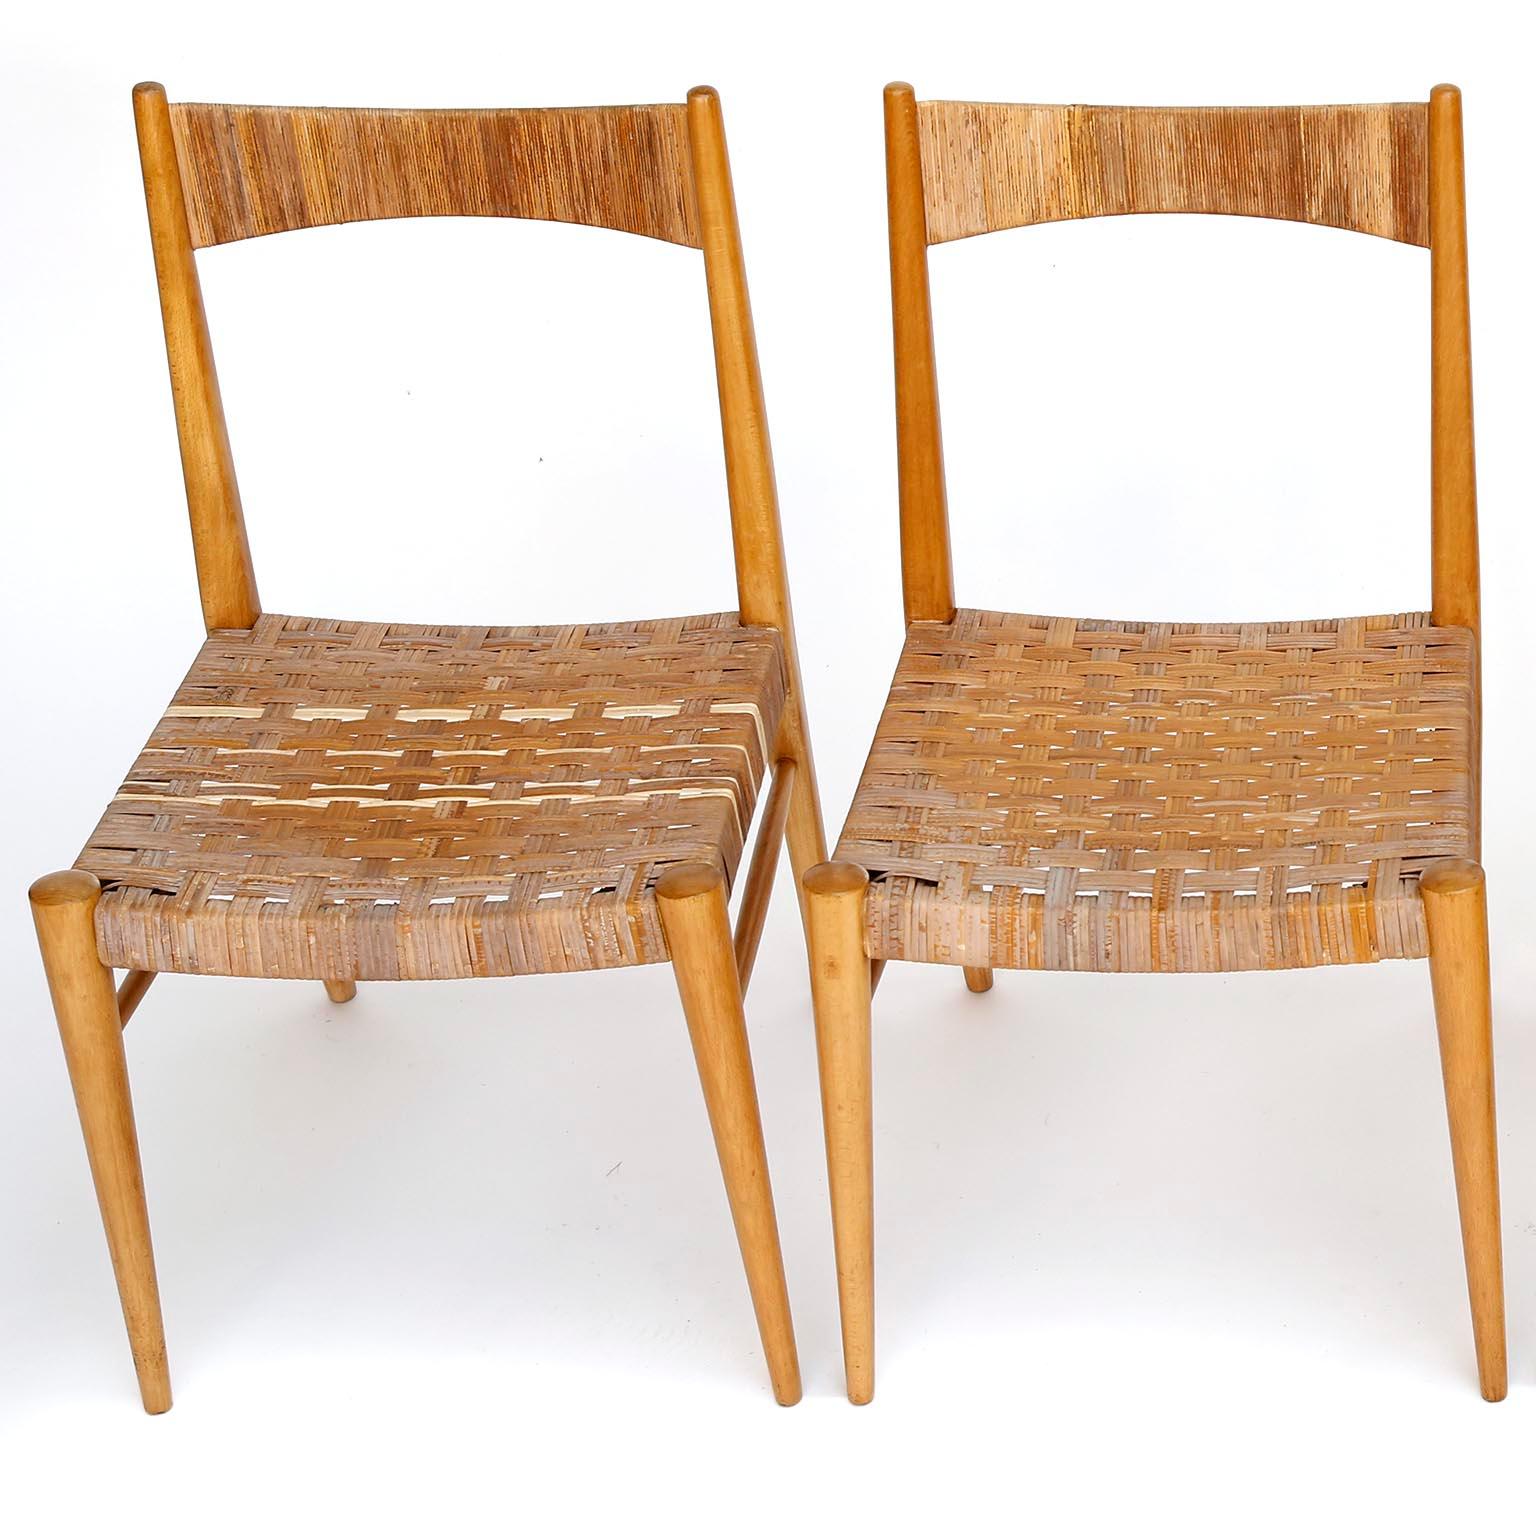 Four Anna-Lülja Praun Chairs, Wood Wicker Cane, 1950s For Sale 8